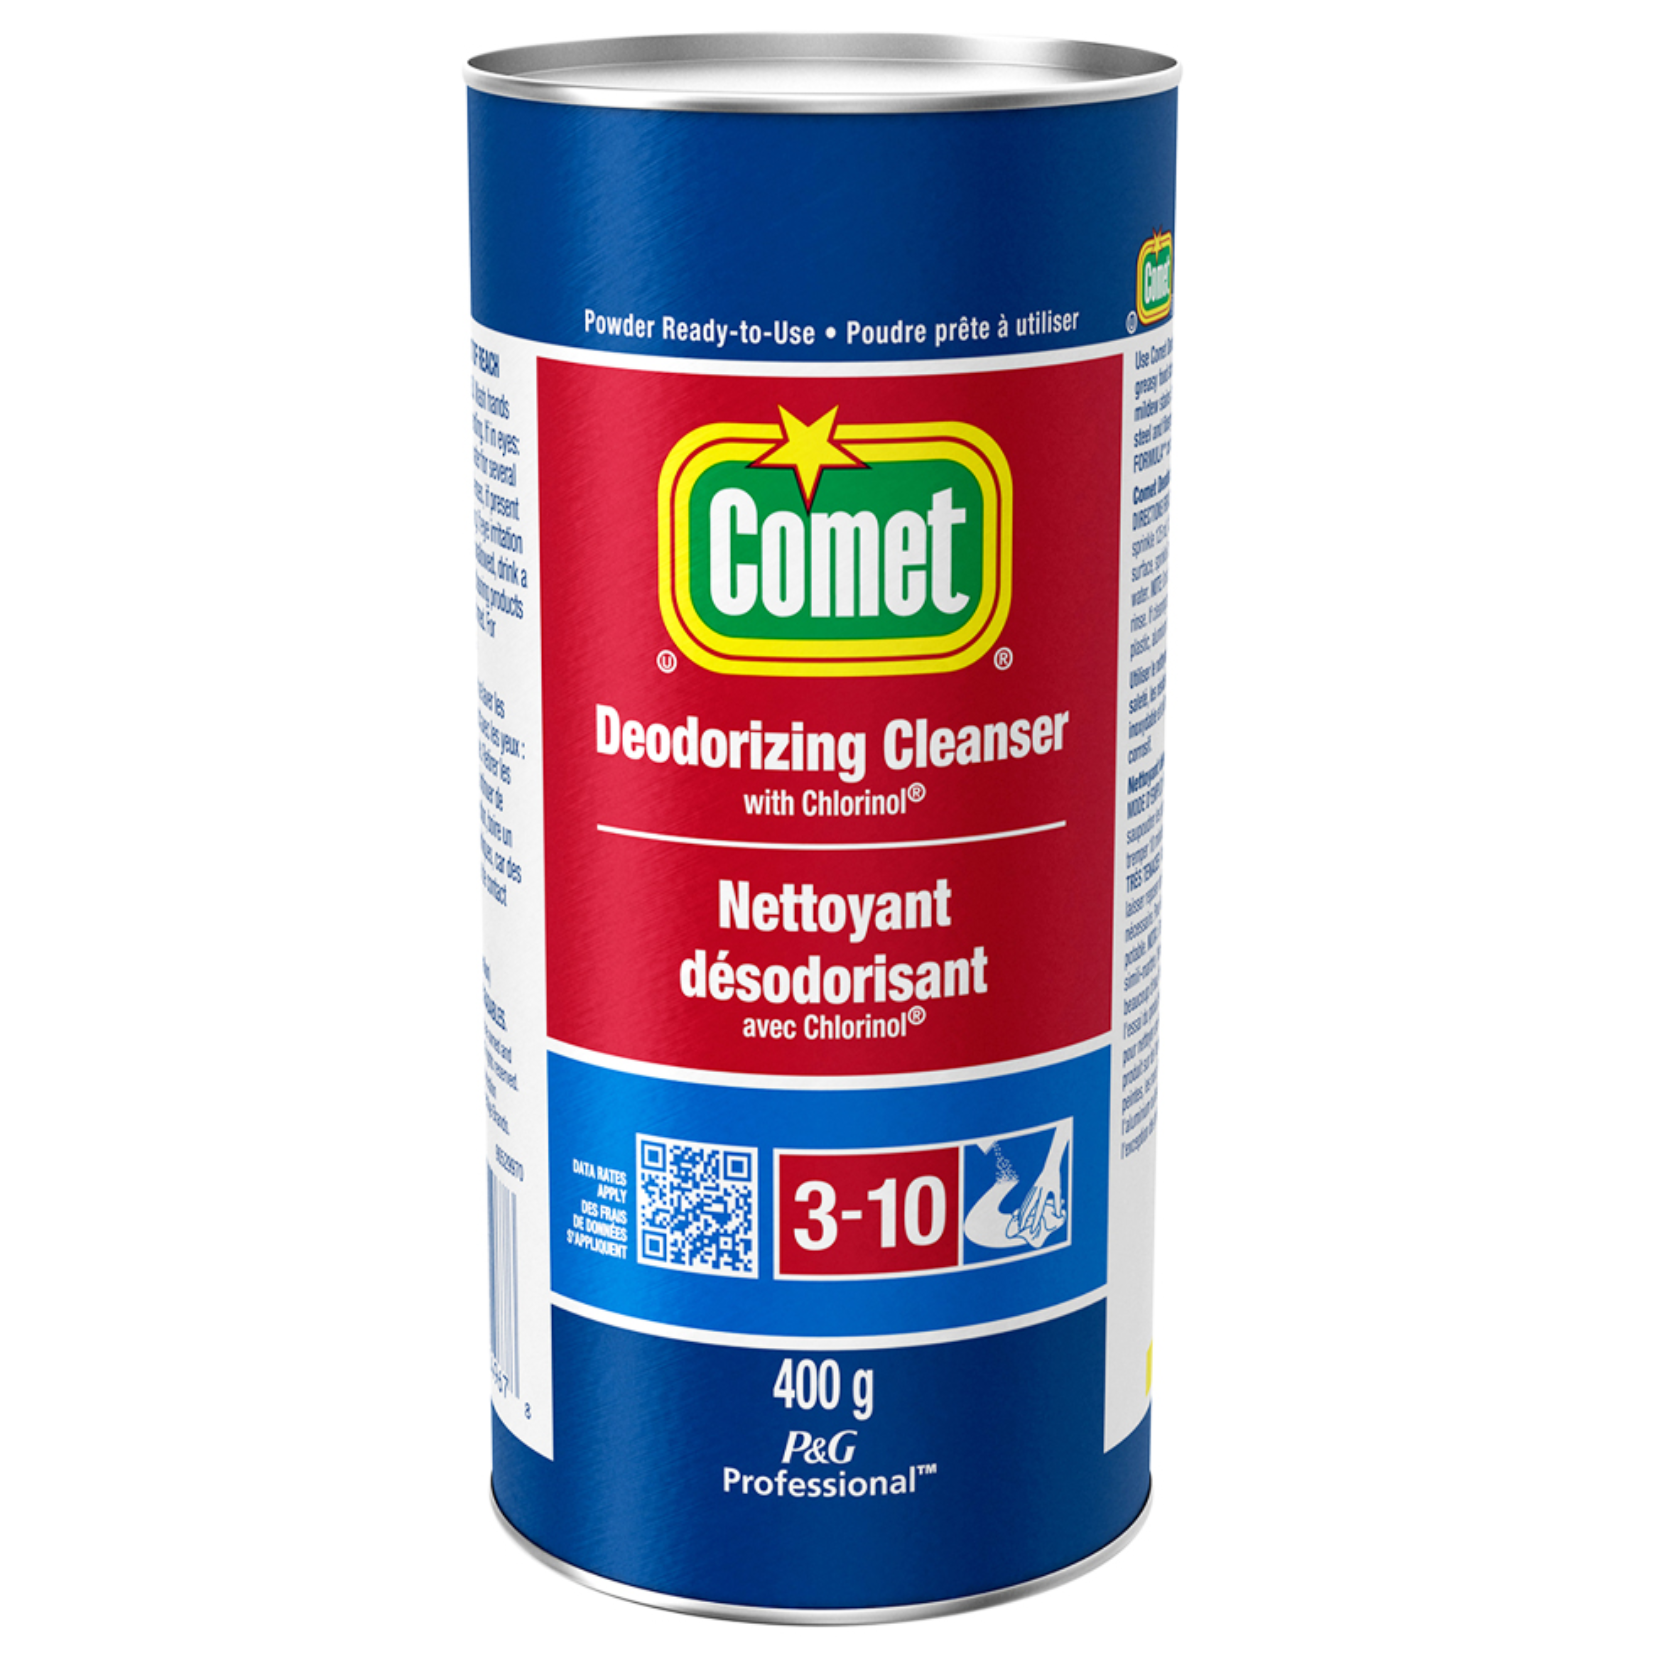 Comet Deodorizing Cleanser 400g